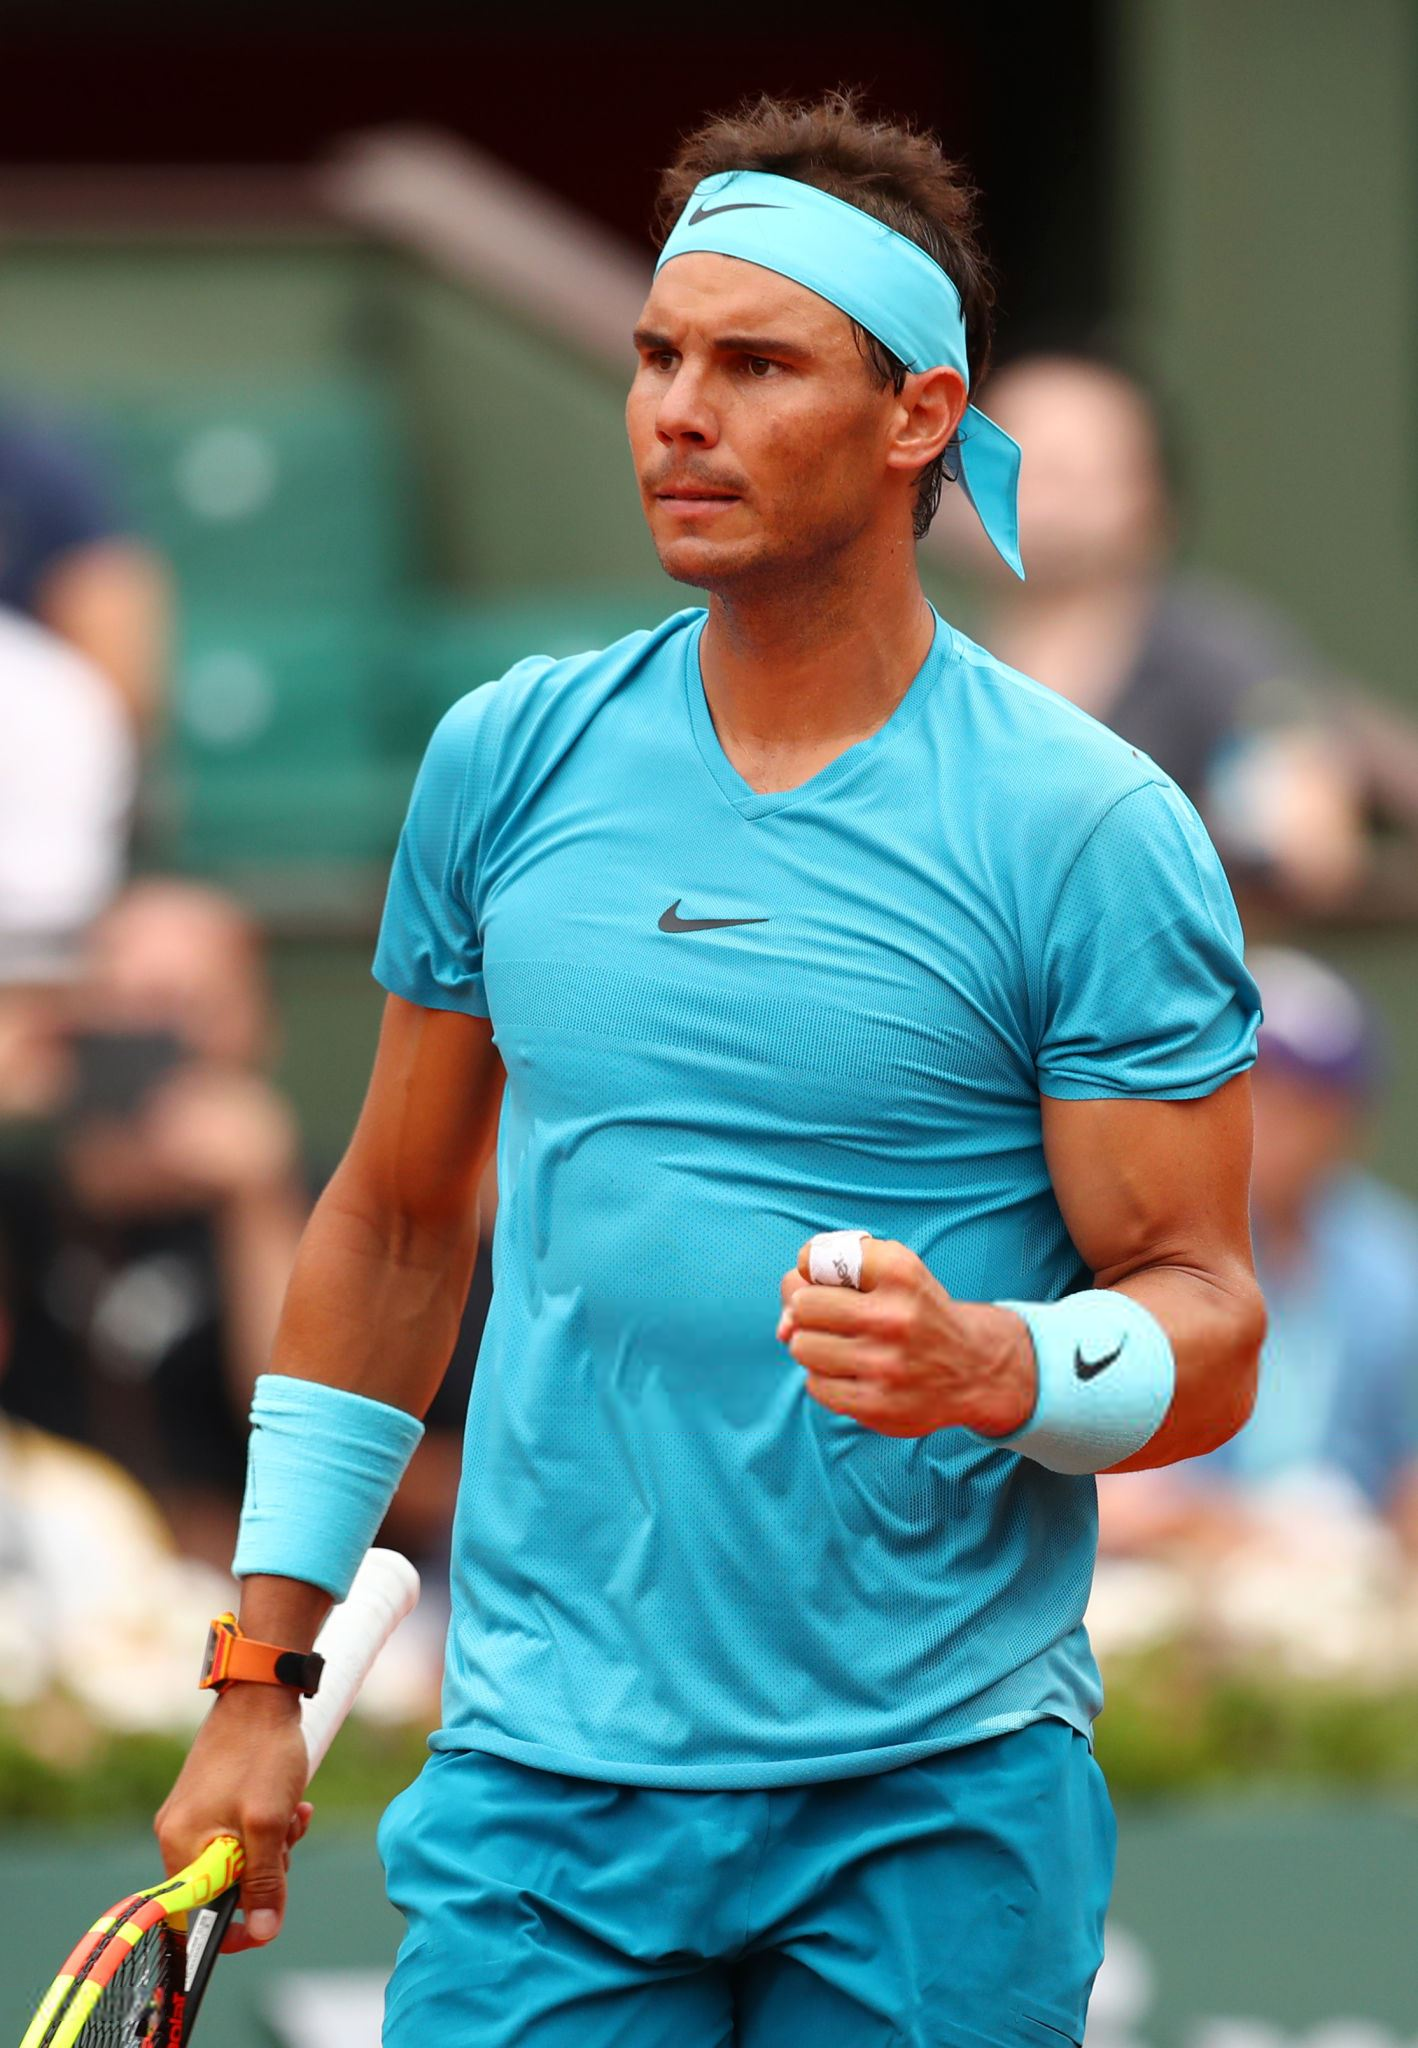 PHOTOS: Rain holds up Rafael Nadal at Roland Garros – Rafael Nadal Fans1418 x 2048